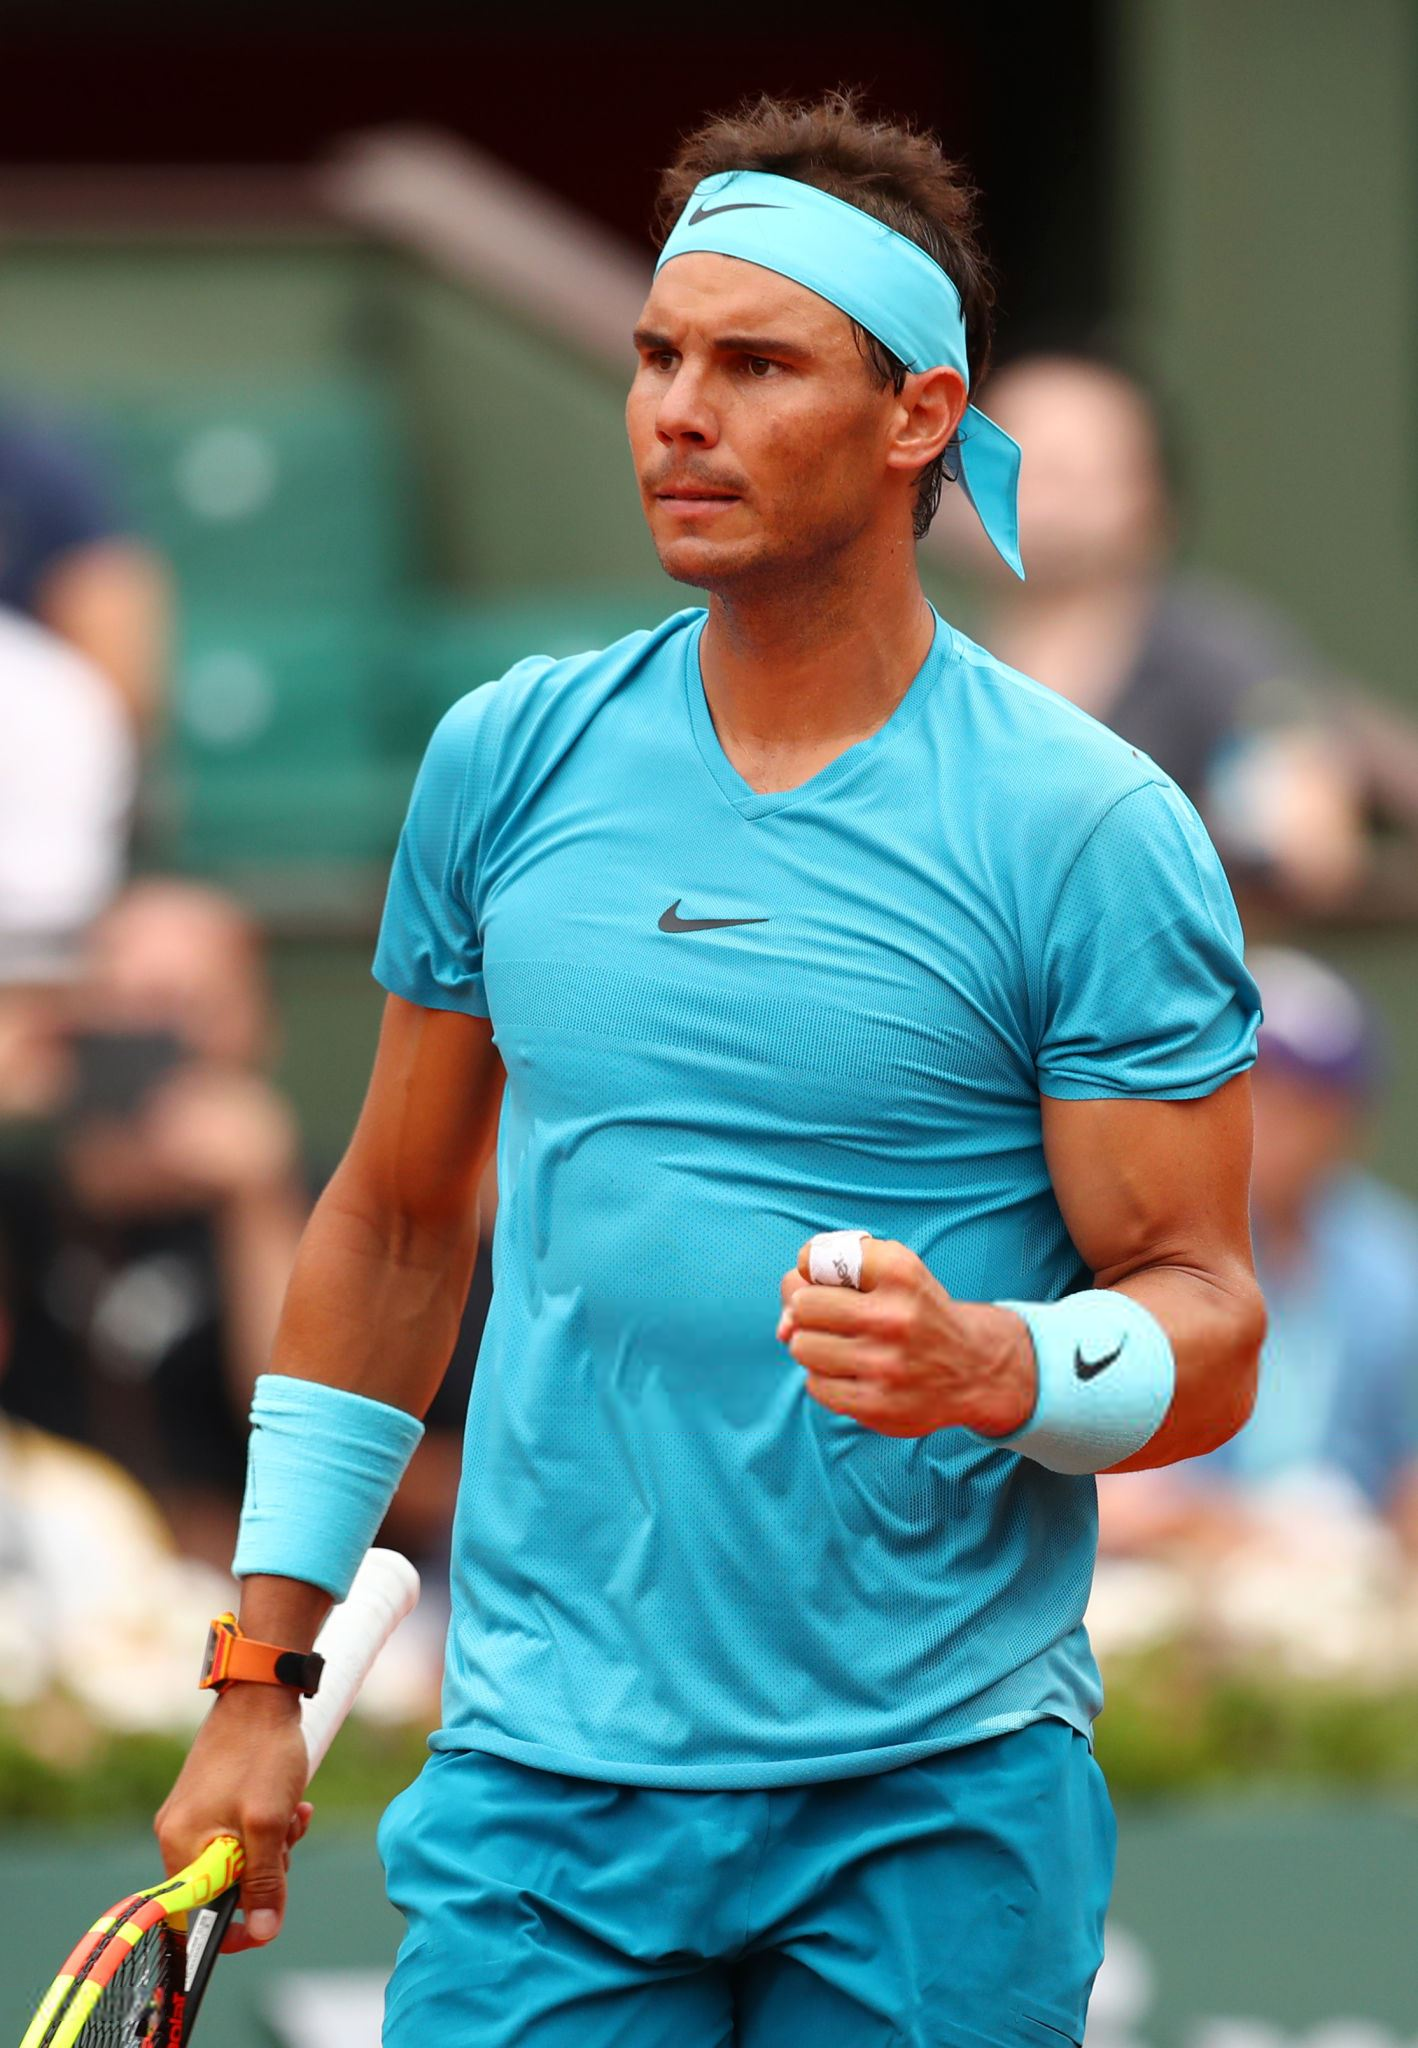 PHOTOS: Rain holds up Rafael Nadal at Roland Garros – Rafael Nadal Fans1418 x 2048